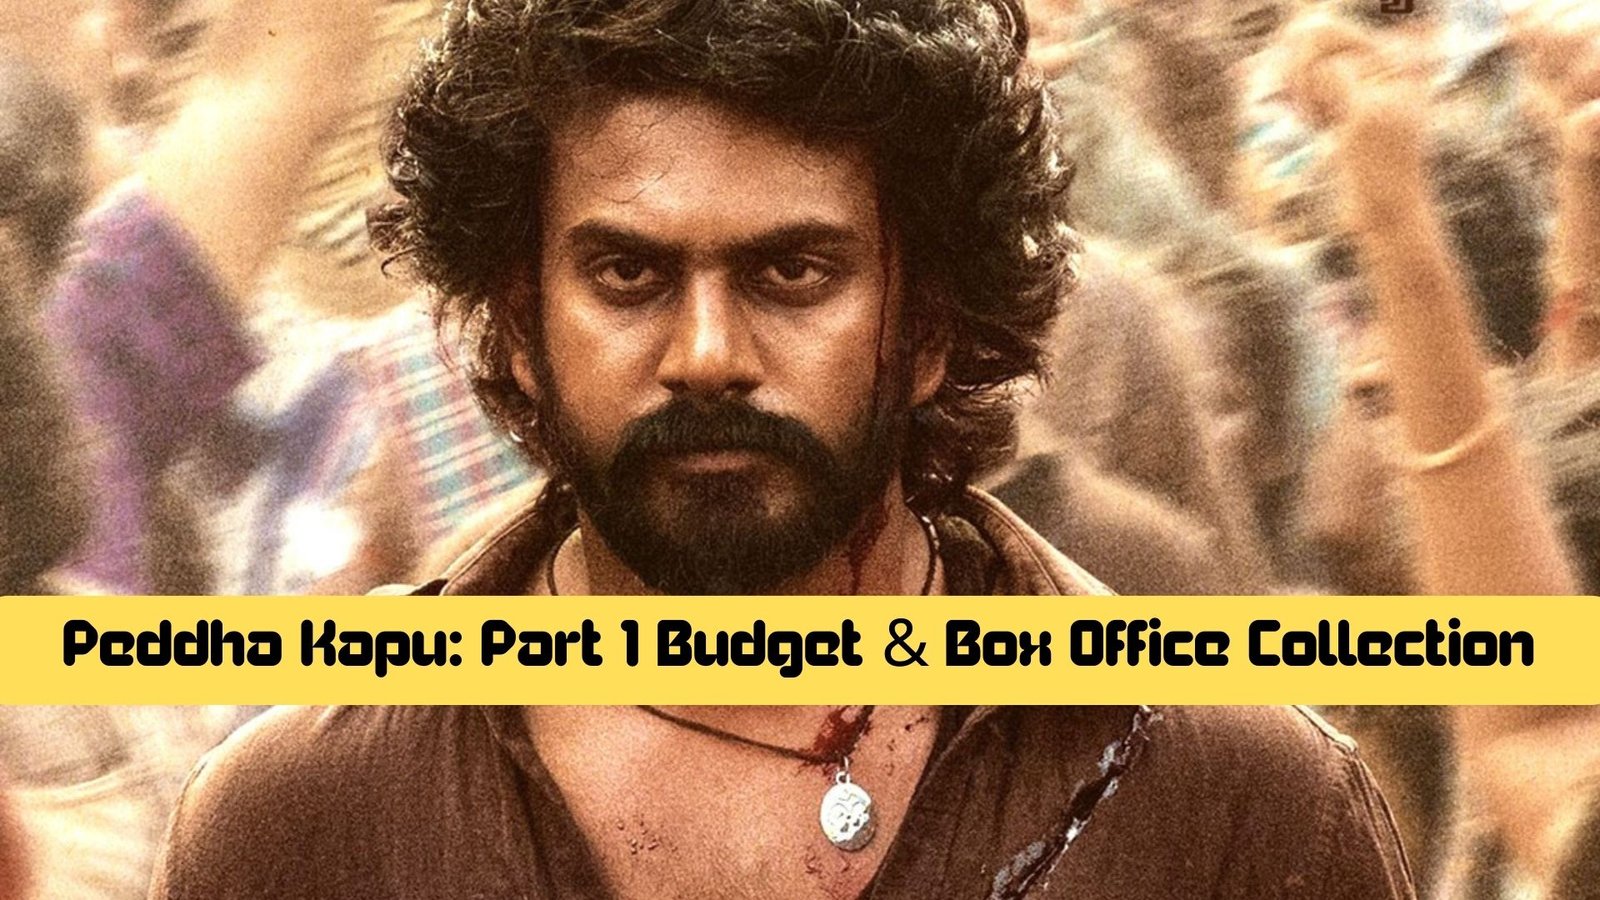 Peddha Kapu: Part 1 Budget, Rating, and Box Office Collection